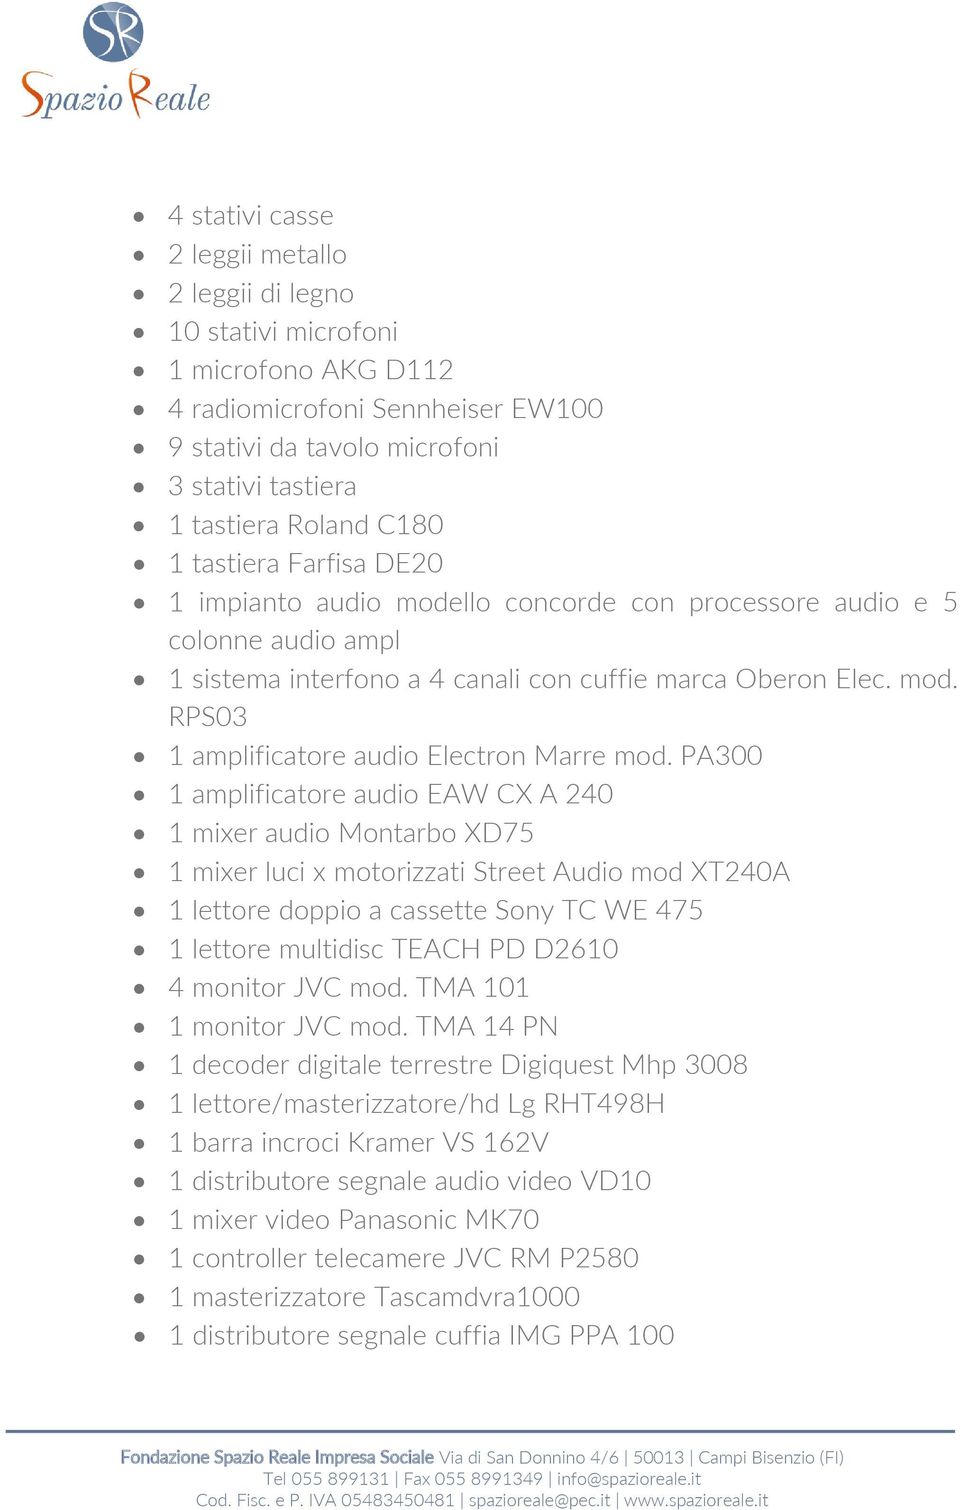 PA300 1 amplificatore audio EAW CX A 240 1 mixer audio Montarbo XD75 1 mixer luci x motorizzati Street Audio mod XT240A 1 lettore doppio a cassette Sony TC WE 475 1 lettore multidisc TEACH PD D2610 4